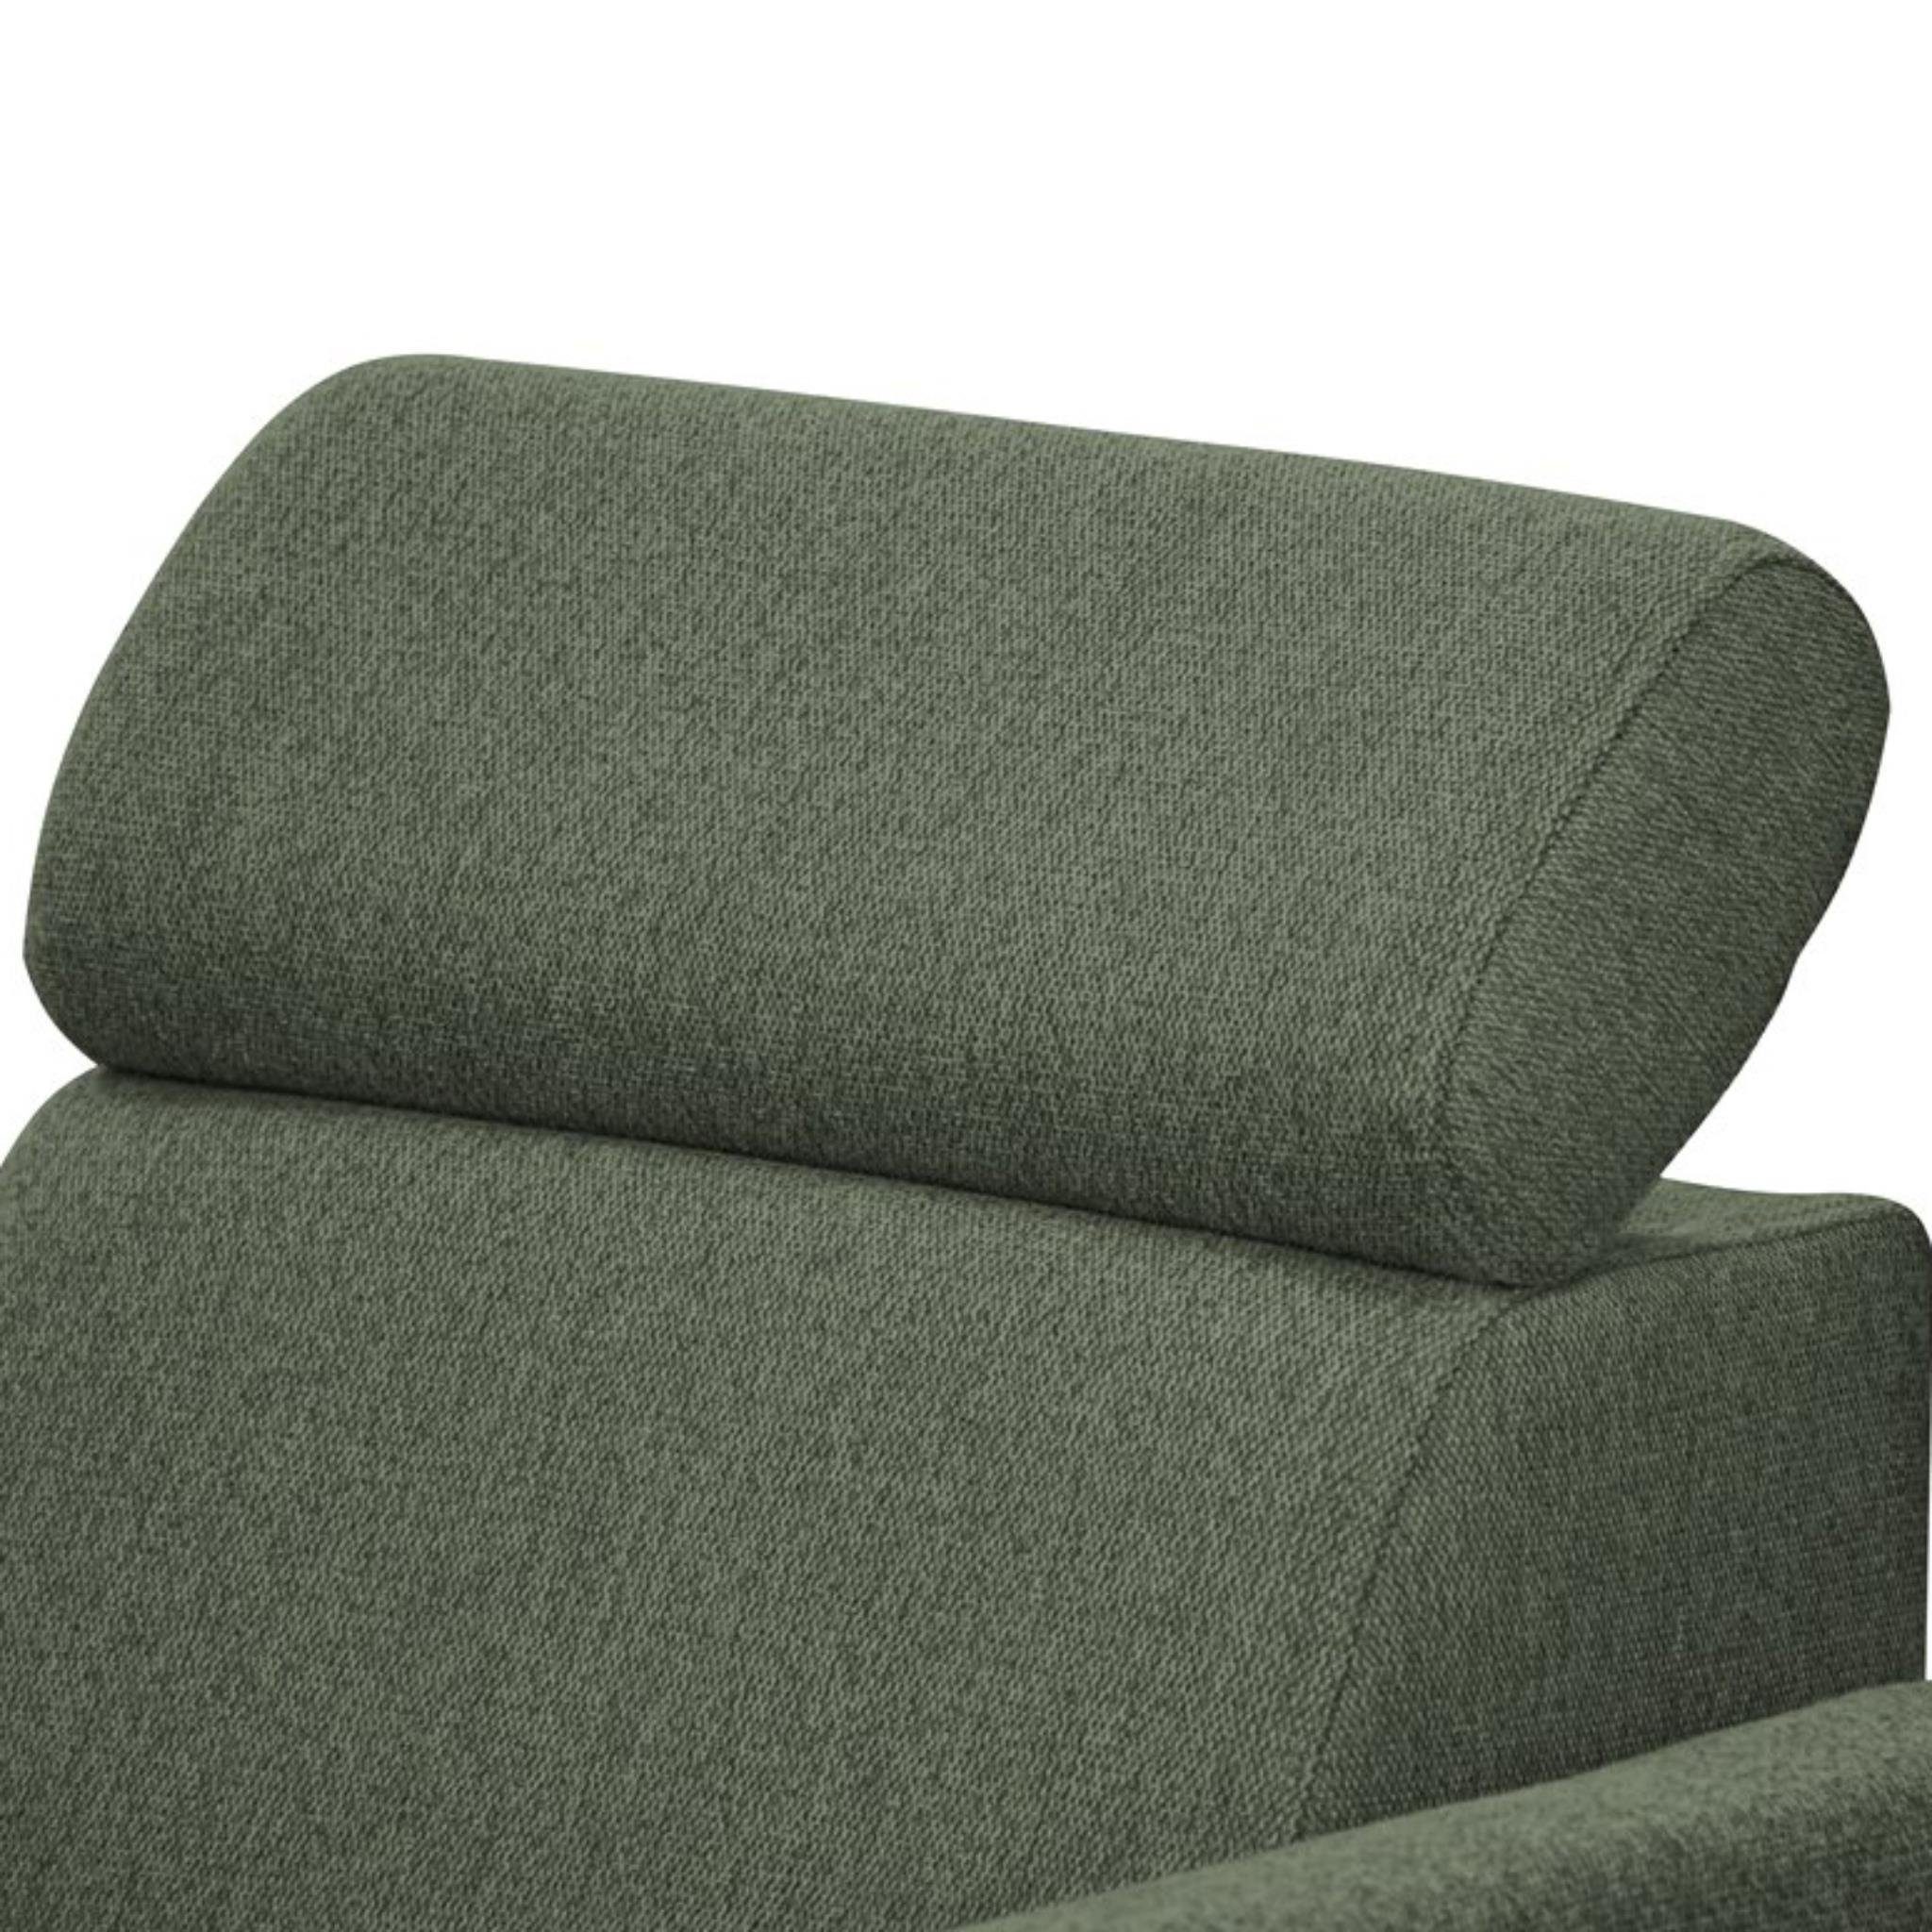 Beautysofa Relaxsessel Madera (modern mit mit Sessel 05) Lounge verstellbare Kopfstütze (matana stilvoll Wellenfedern), Polstersessel Dunkelgrau